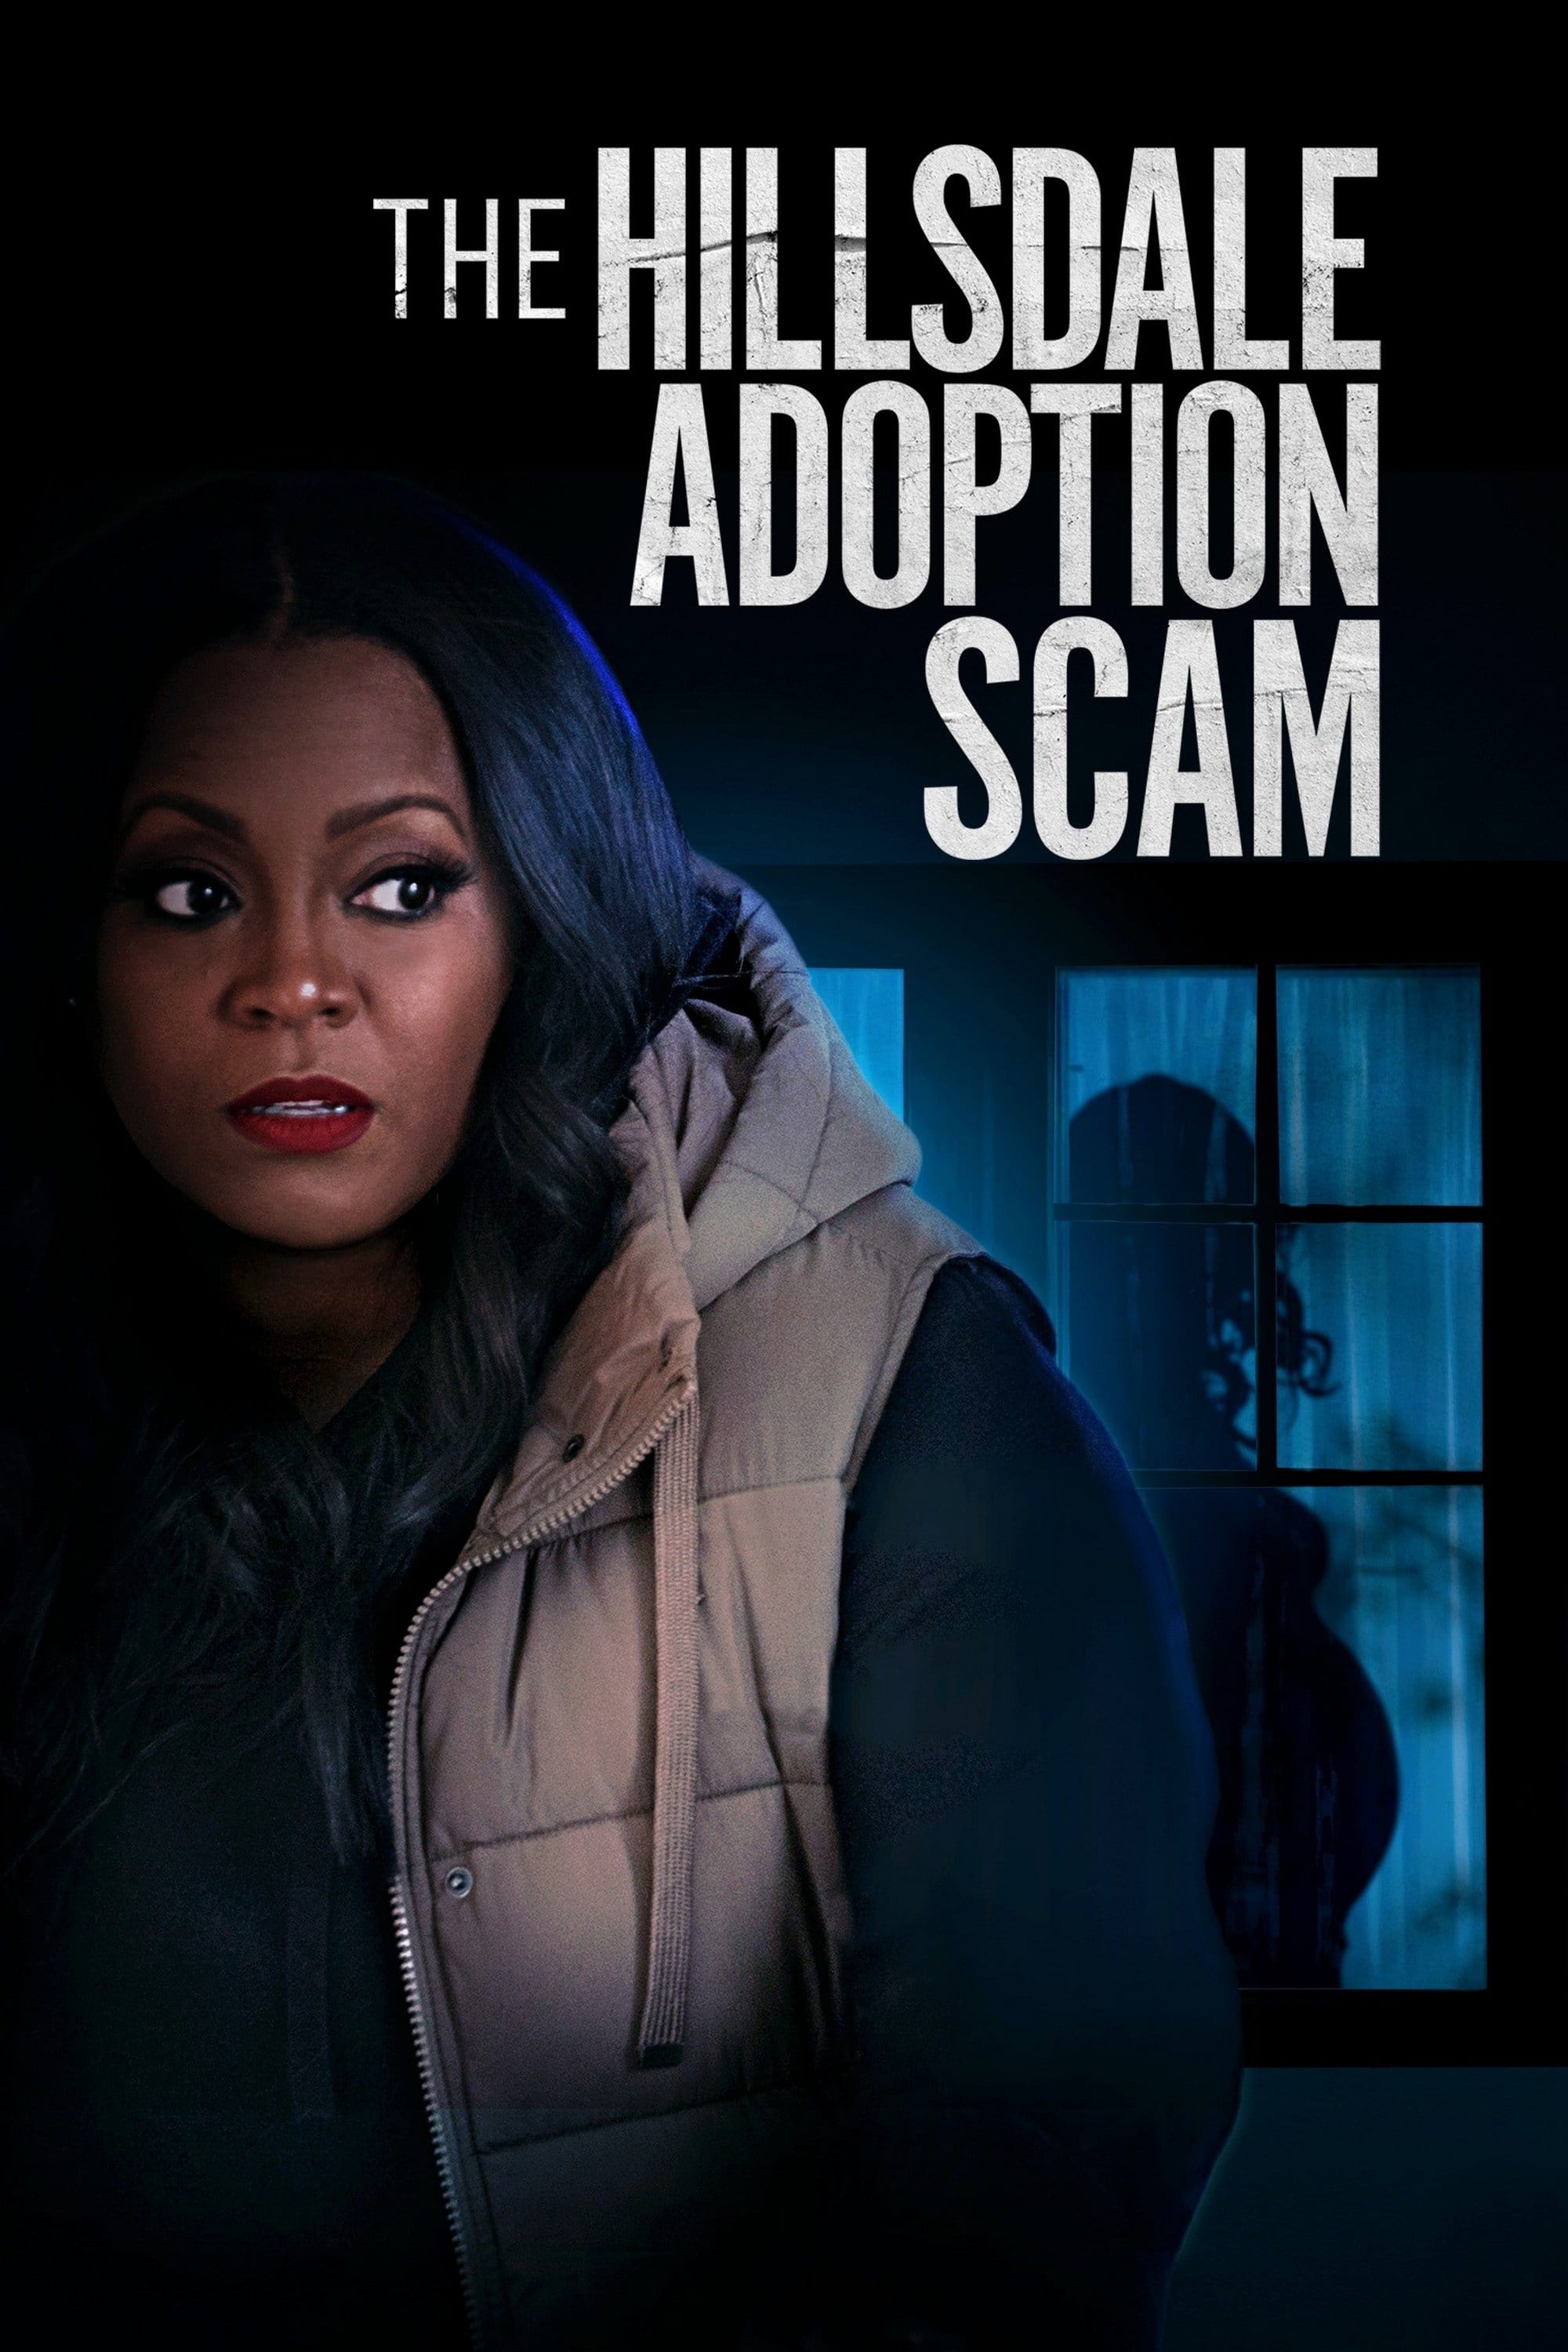 The Hillsdale Adoption Scam film